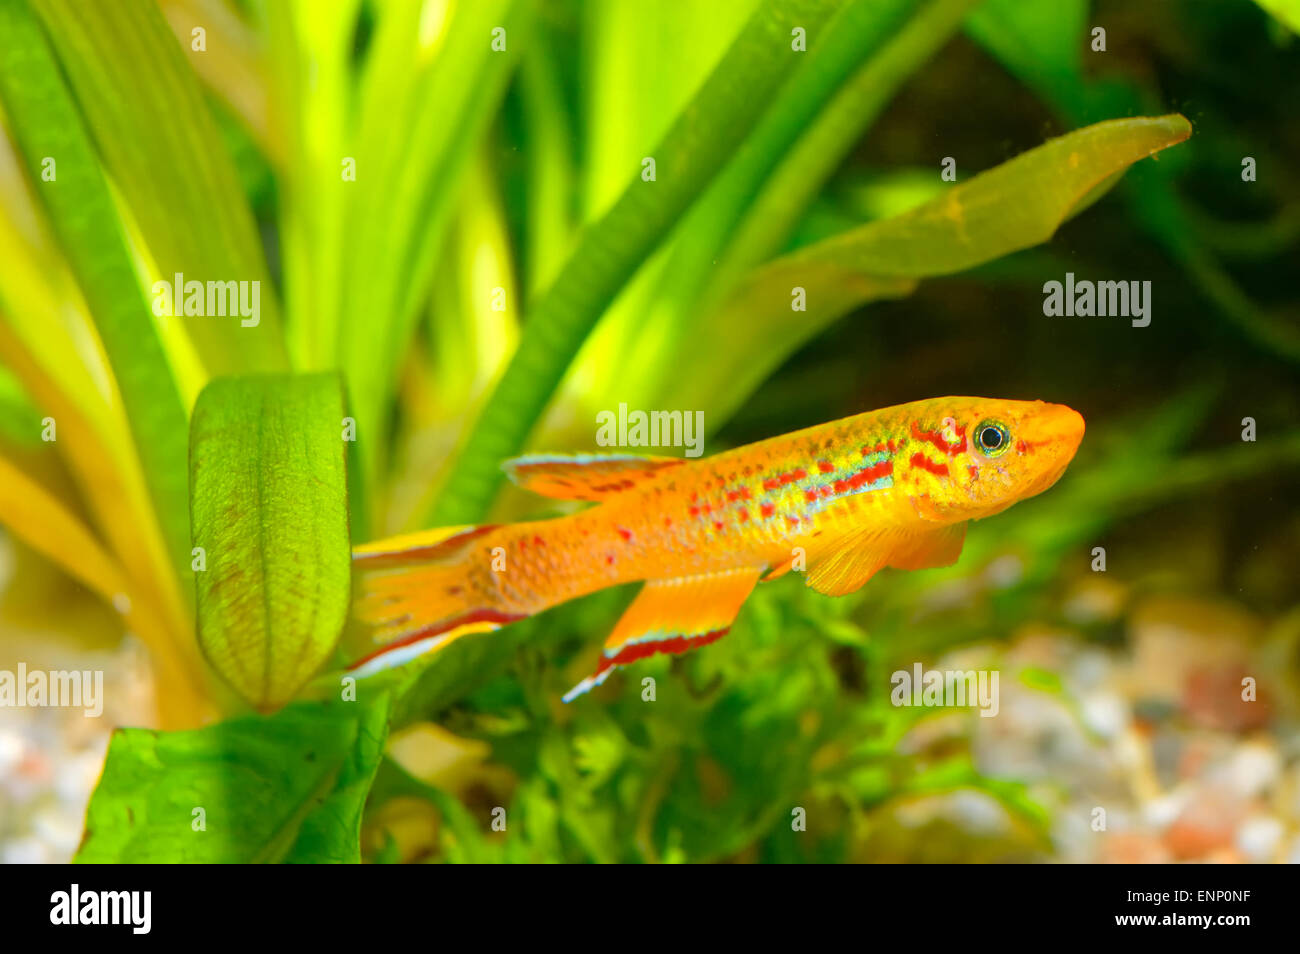 Nice aquarium fish from genus Aphyosemion. Stock Photo